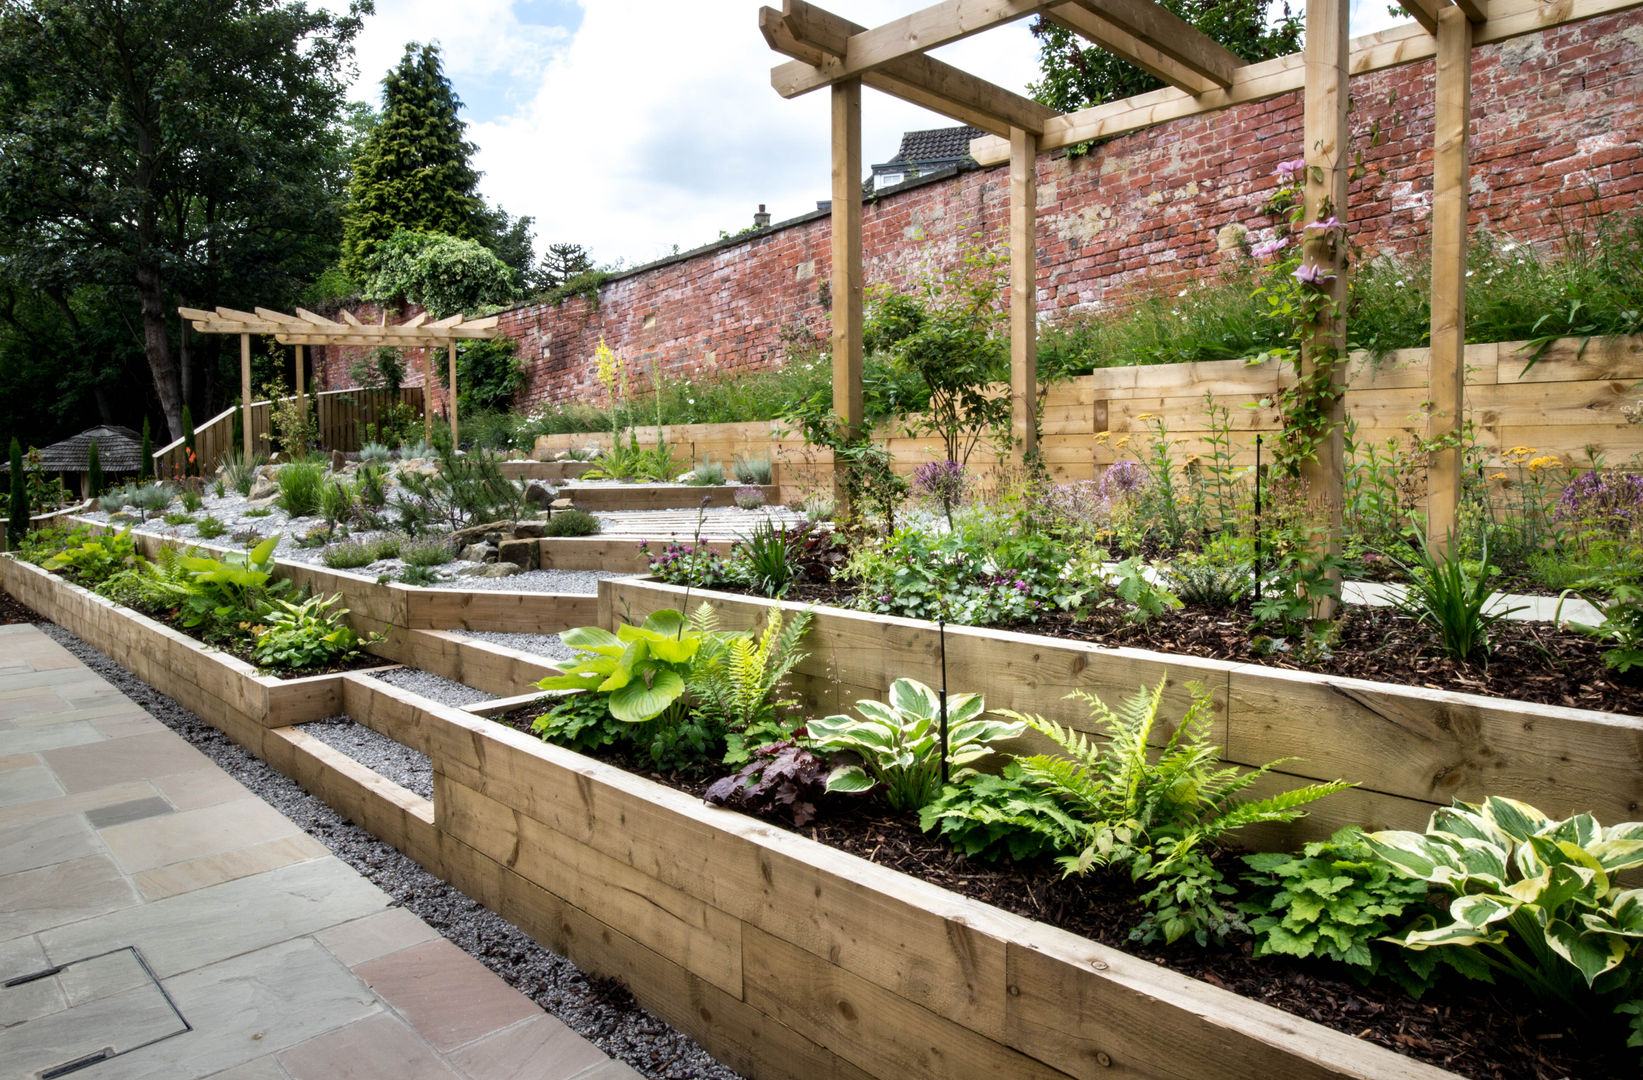 Modern Garden with a rustic twist Yorkshire Gardens モダンな庭 raised beds,railway sleepers,sleepers,pergola